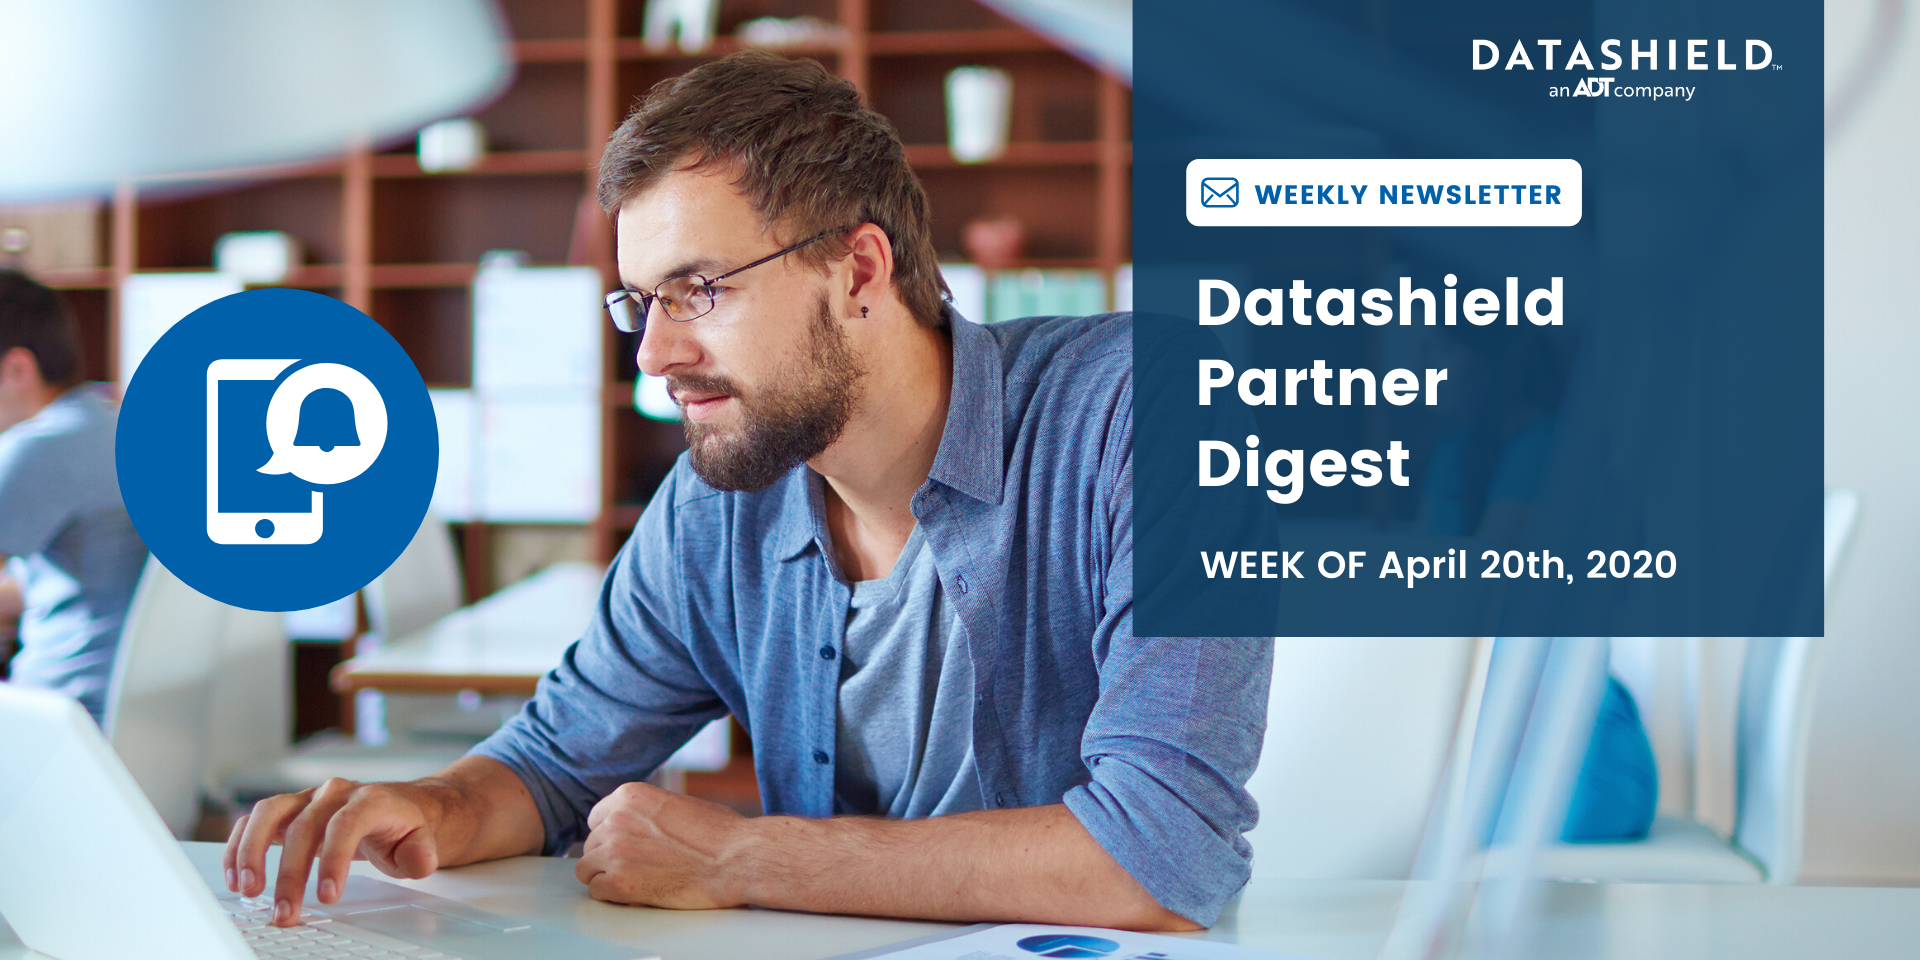 Datashield Partner Digest 04/20/20